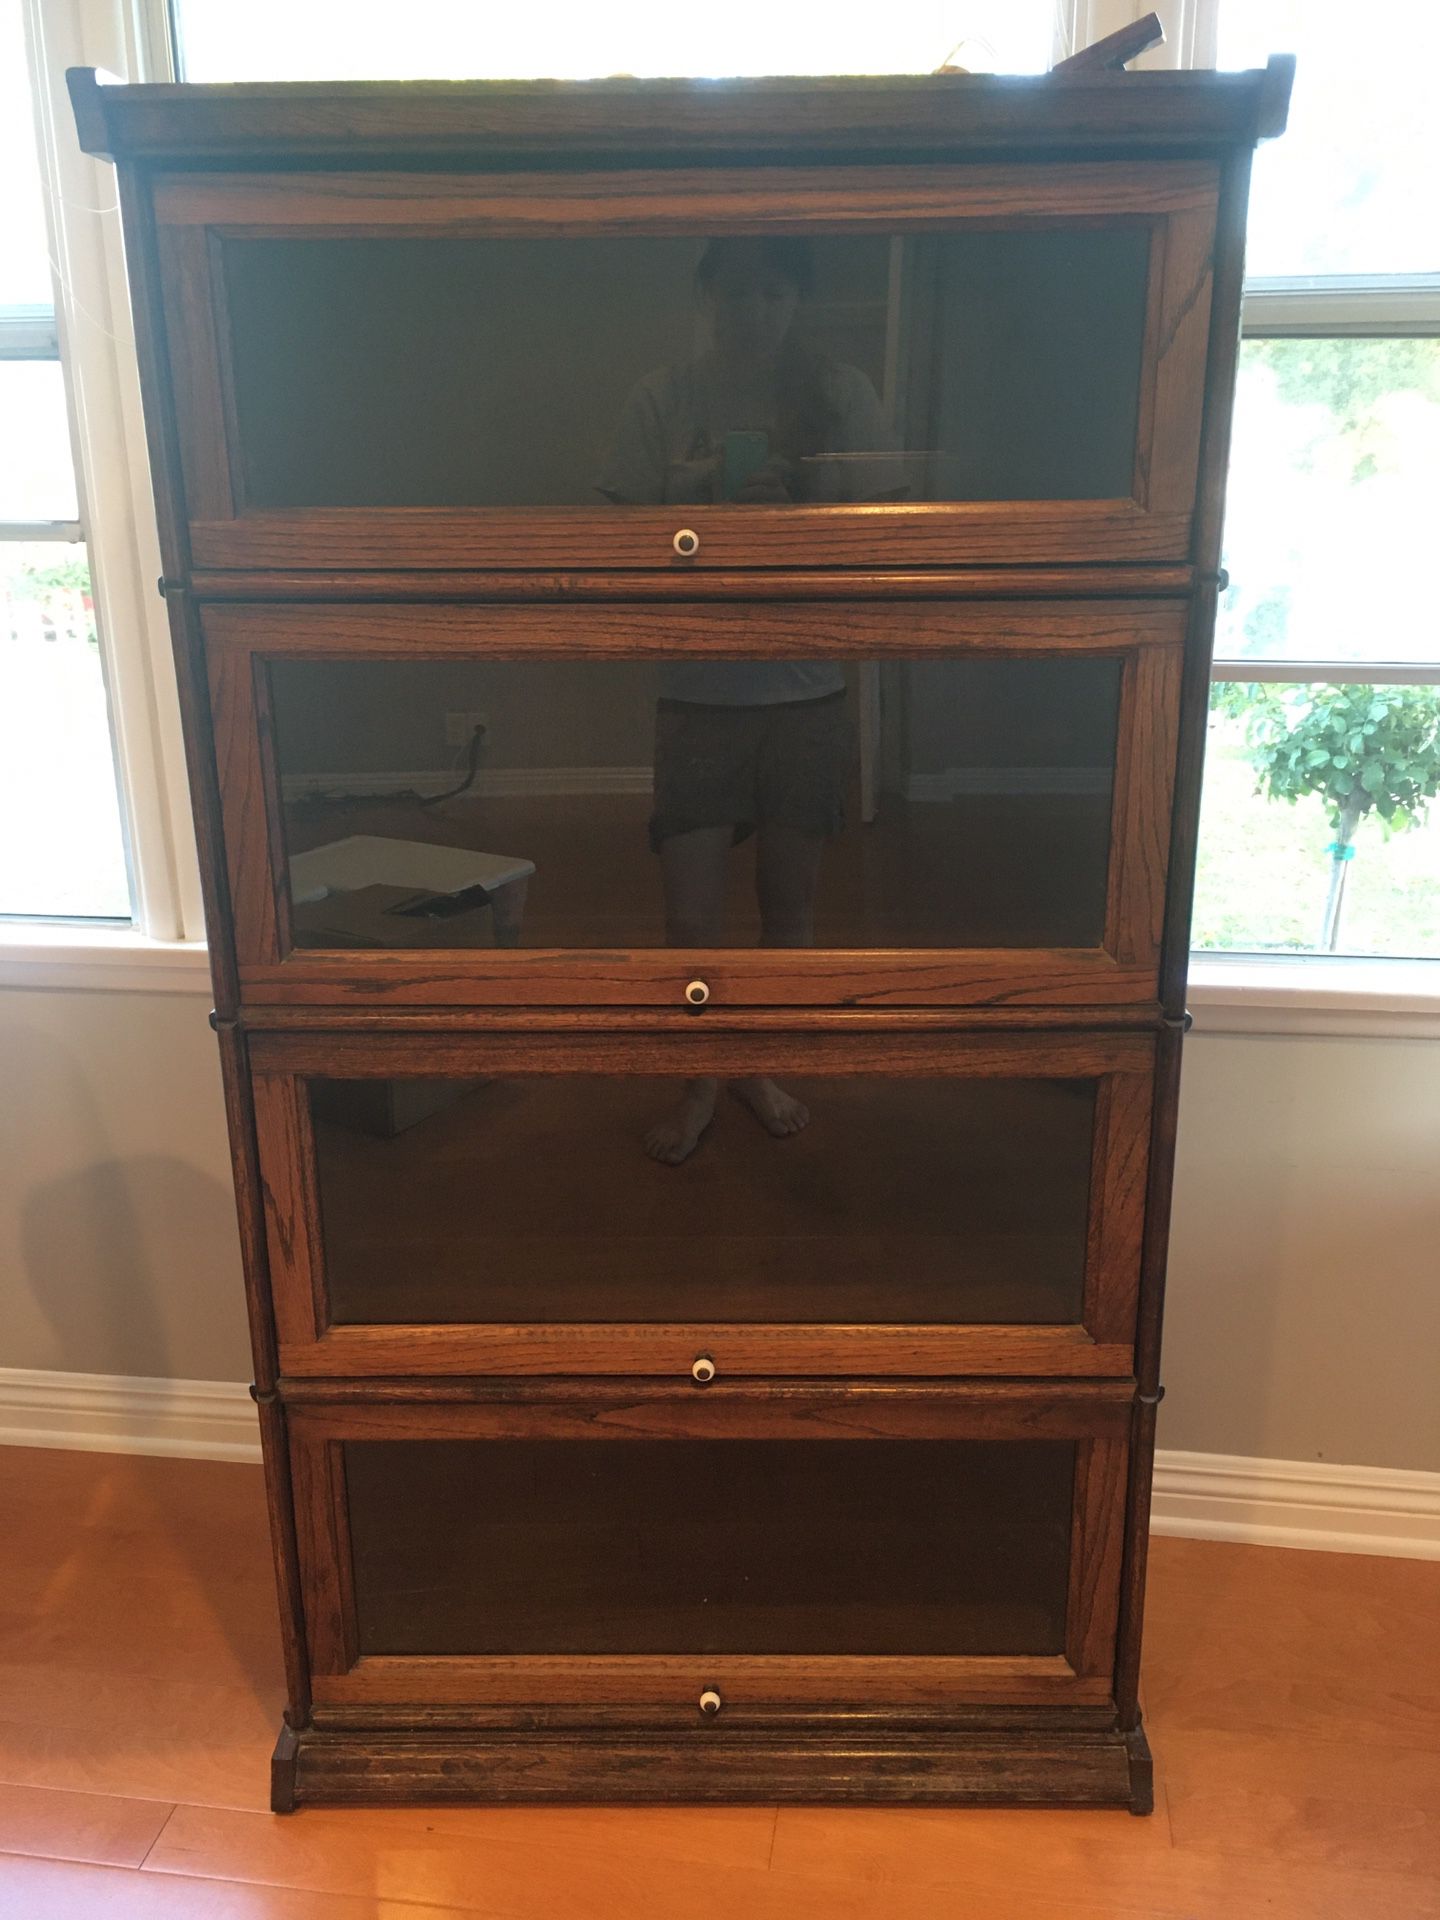 Wooden shelf/cabinet unit